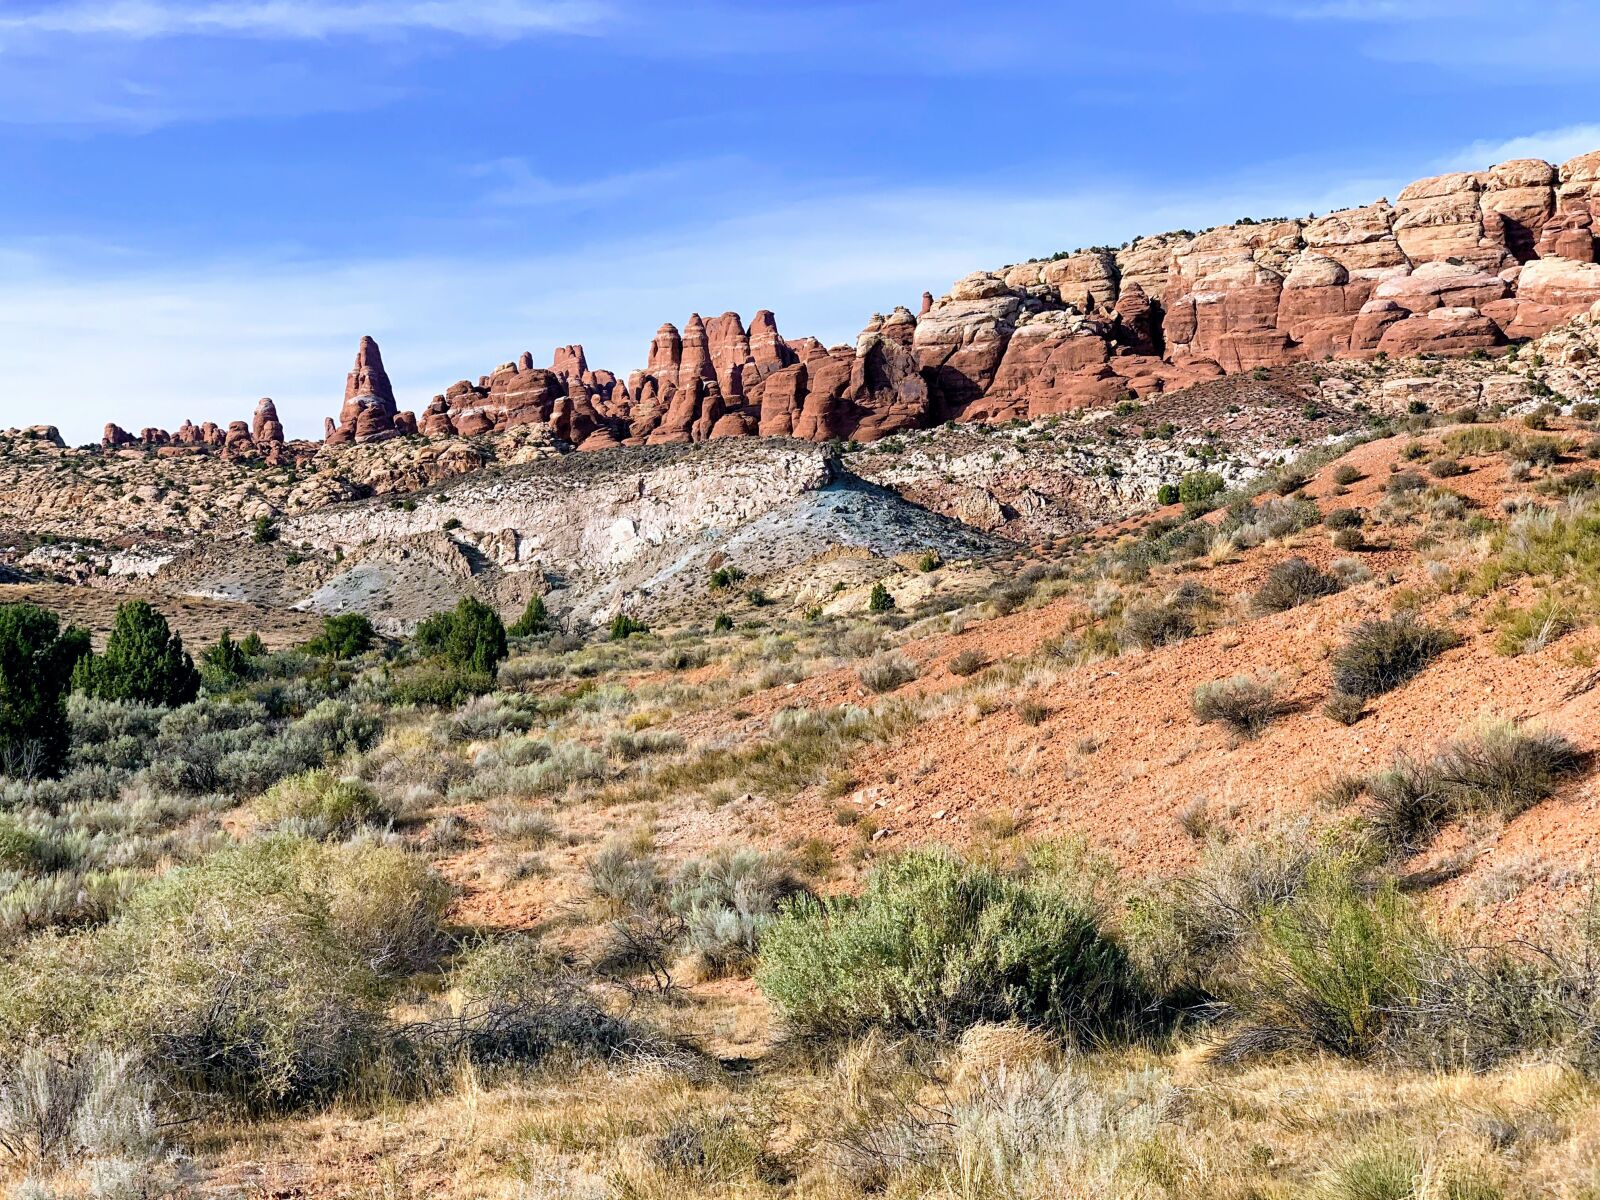 iPhone XS back dual camera 6mm f/2.4 sample photo. Utah, moab, landscape photography